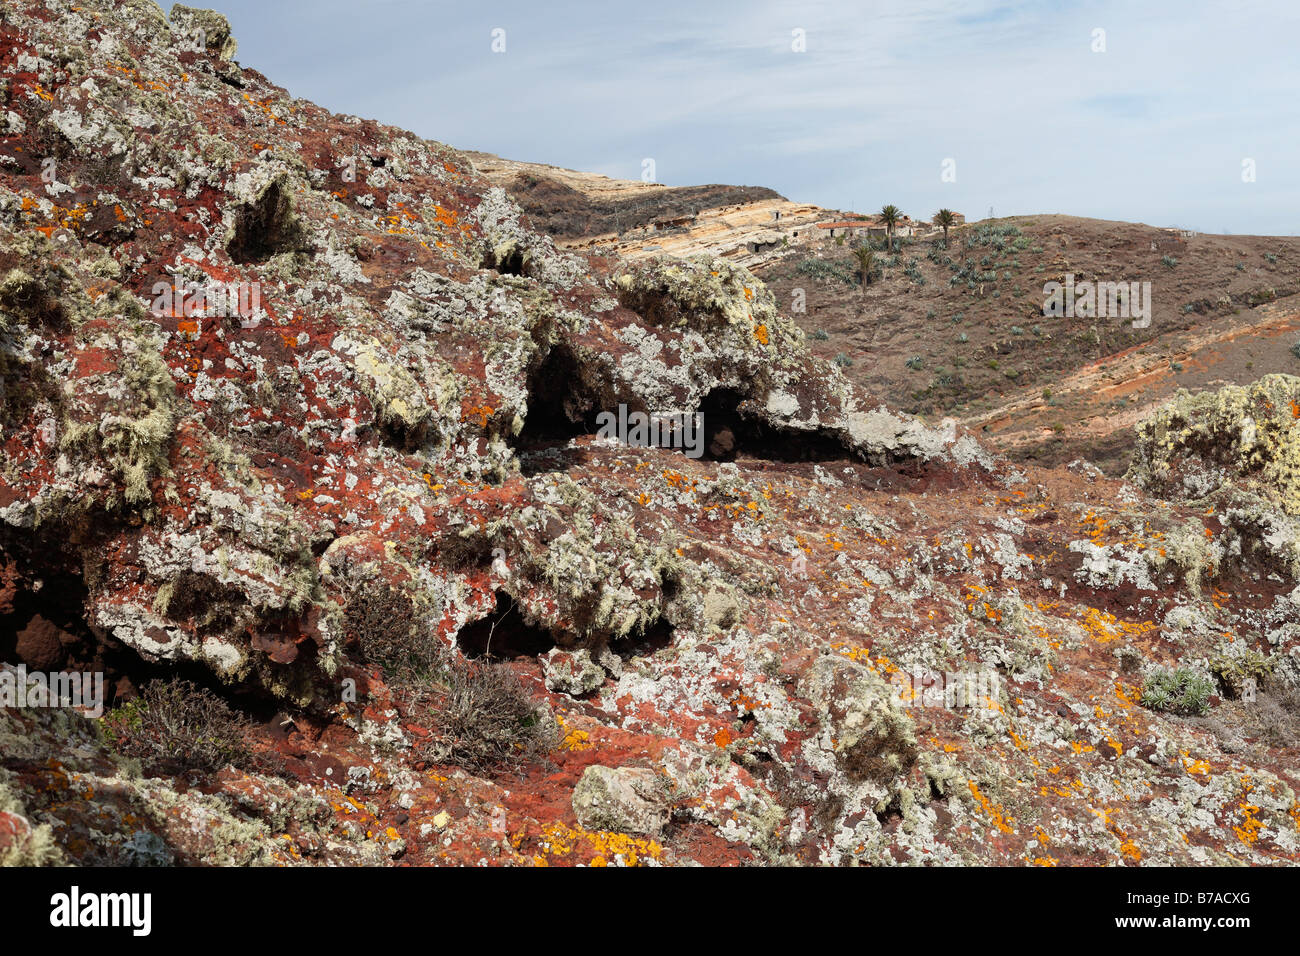 Le lichen sur la pierre de lave, Majona, La Gomera, Canary Islands, Spain, Europe Banque D'Images